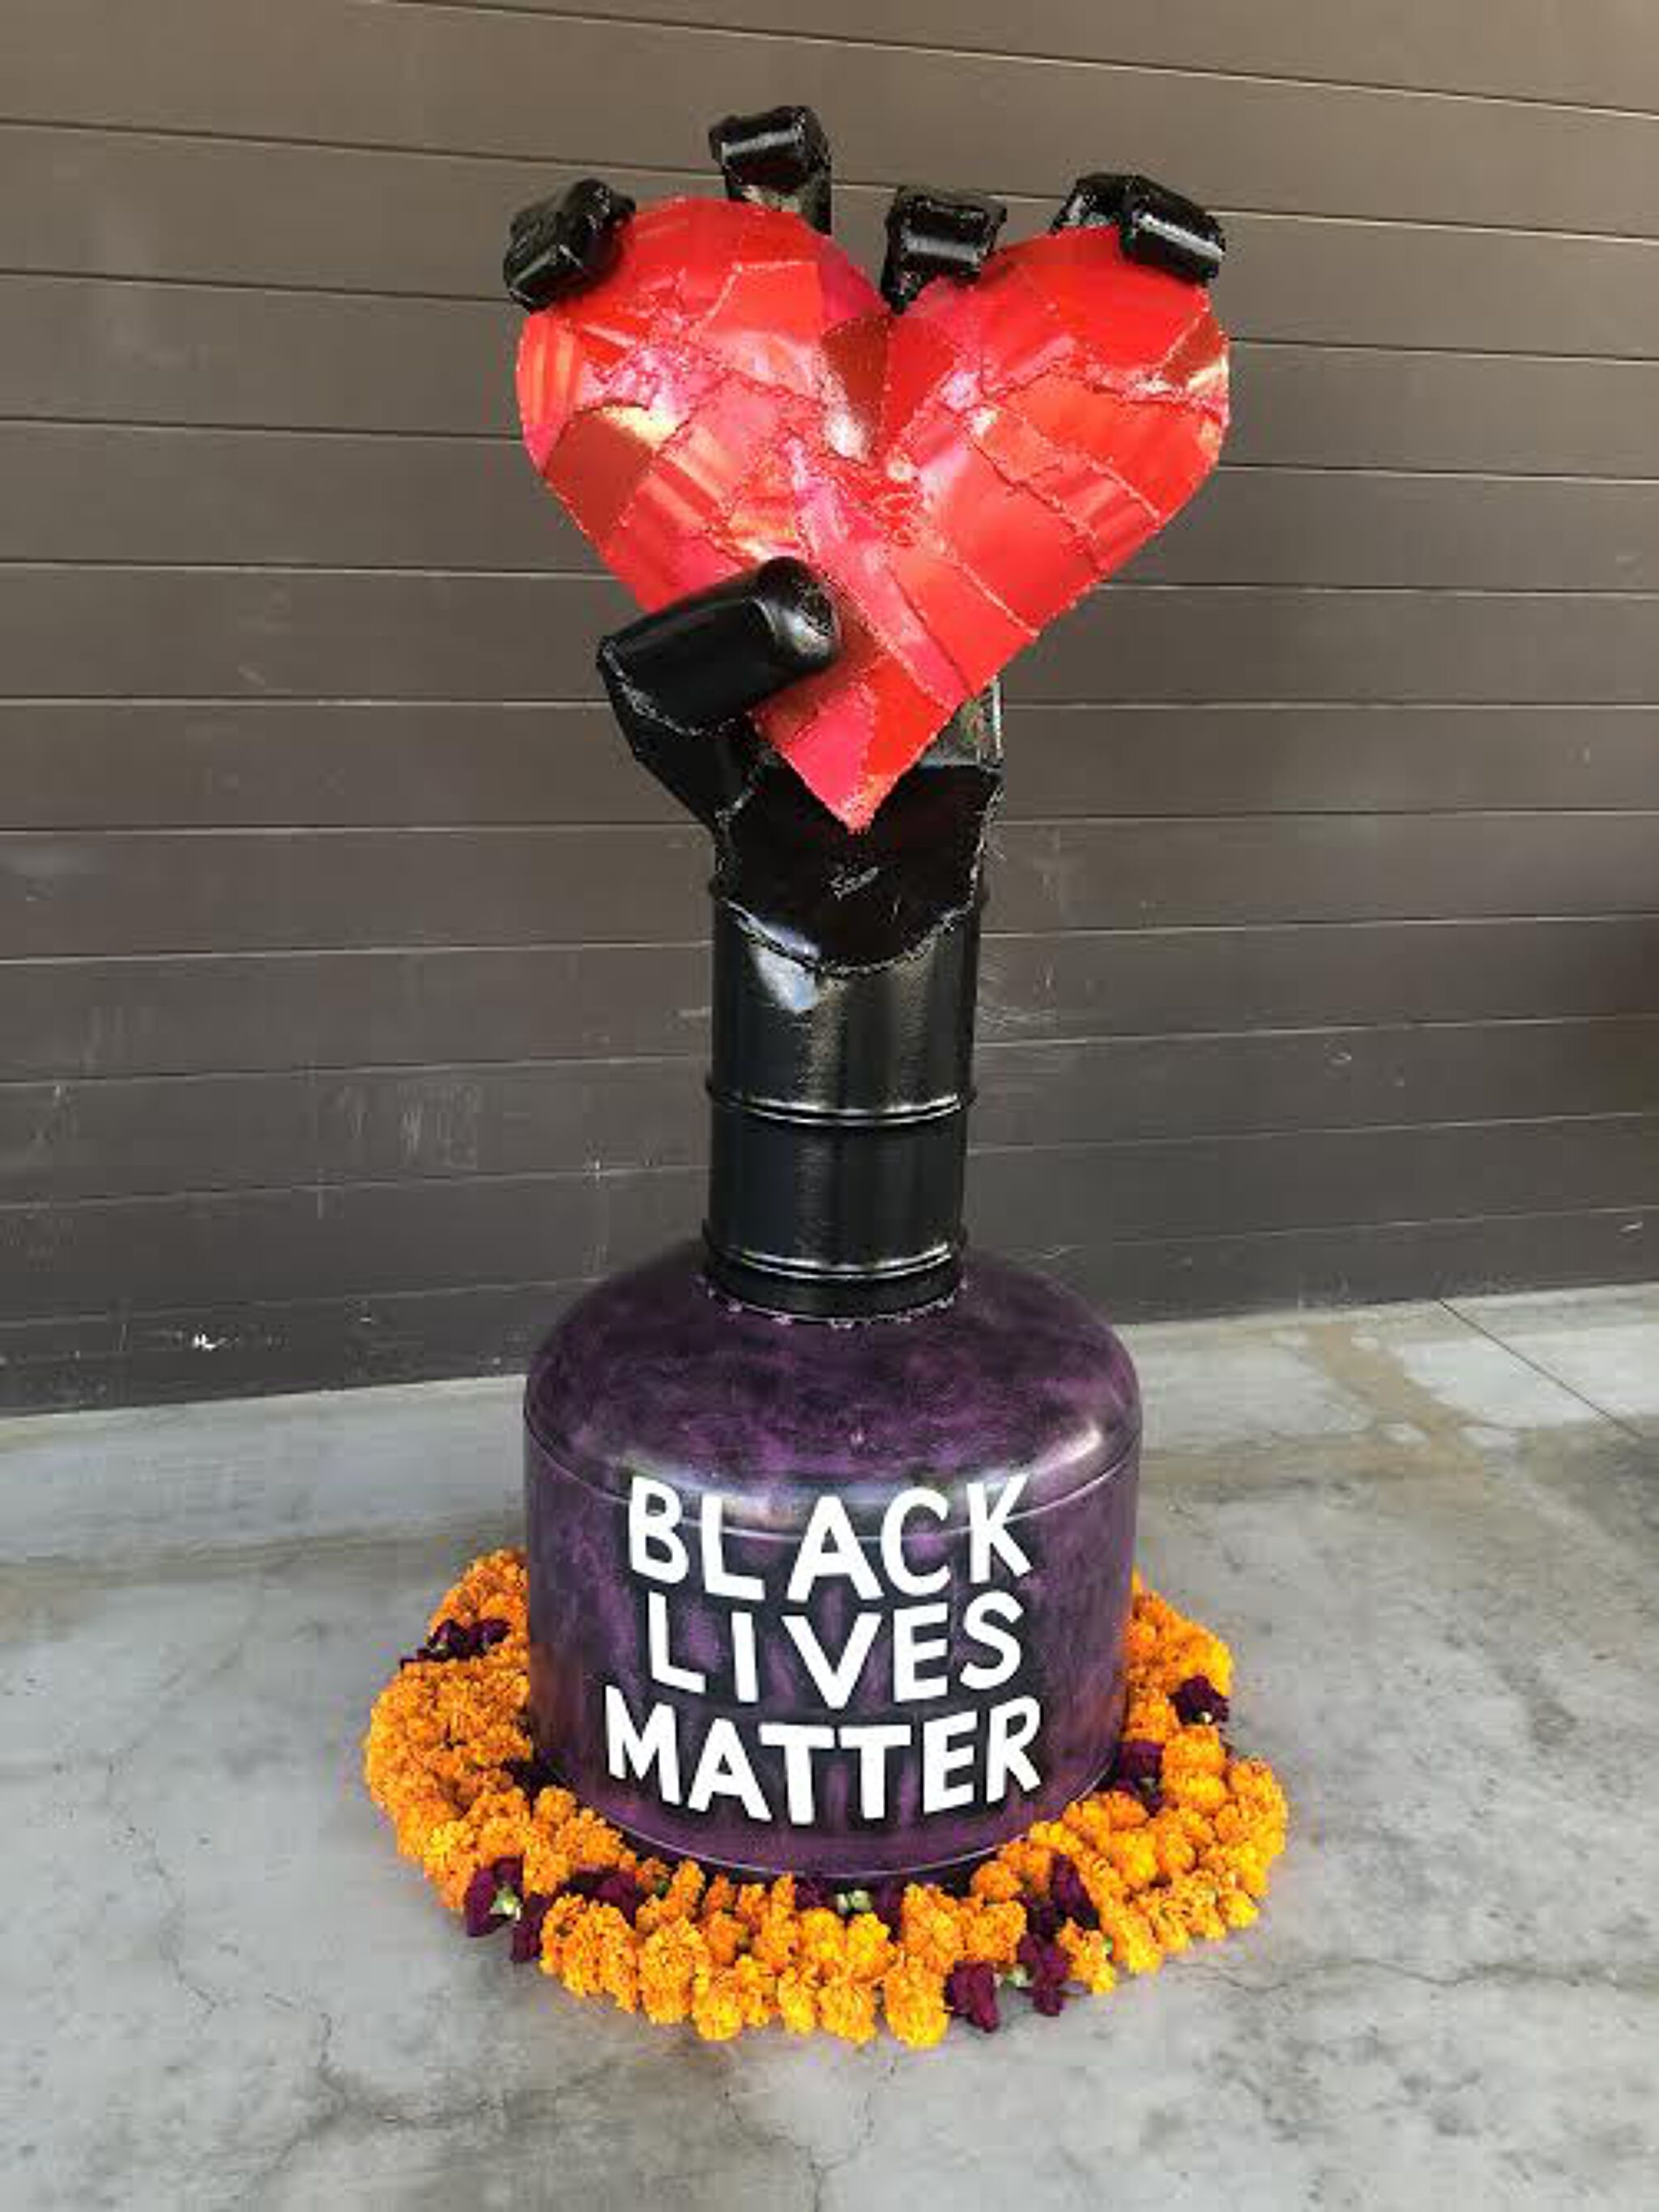 Patrick Amiot, Brigitte Laurent&mdash;Black Lives Matter